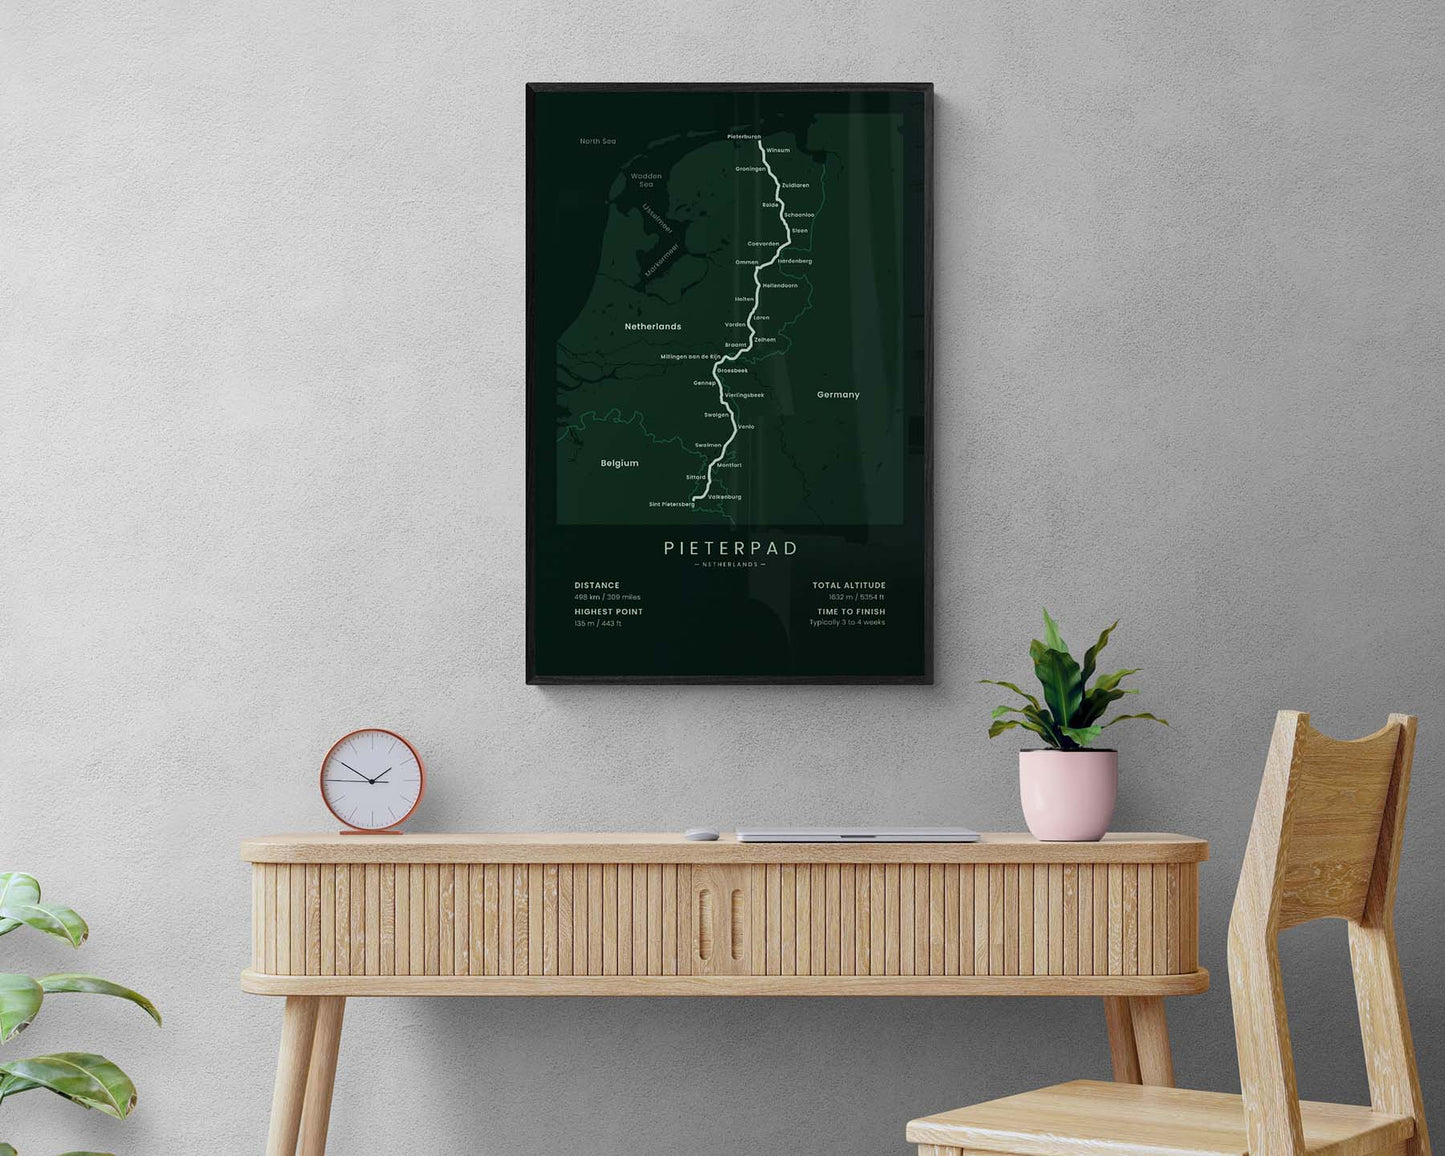 Pieterpad (the Netherlands) thru hike wall map in minimal room decor